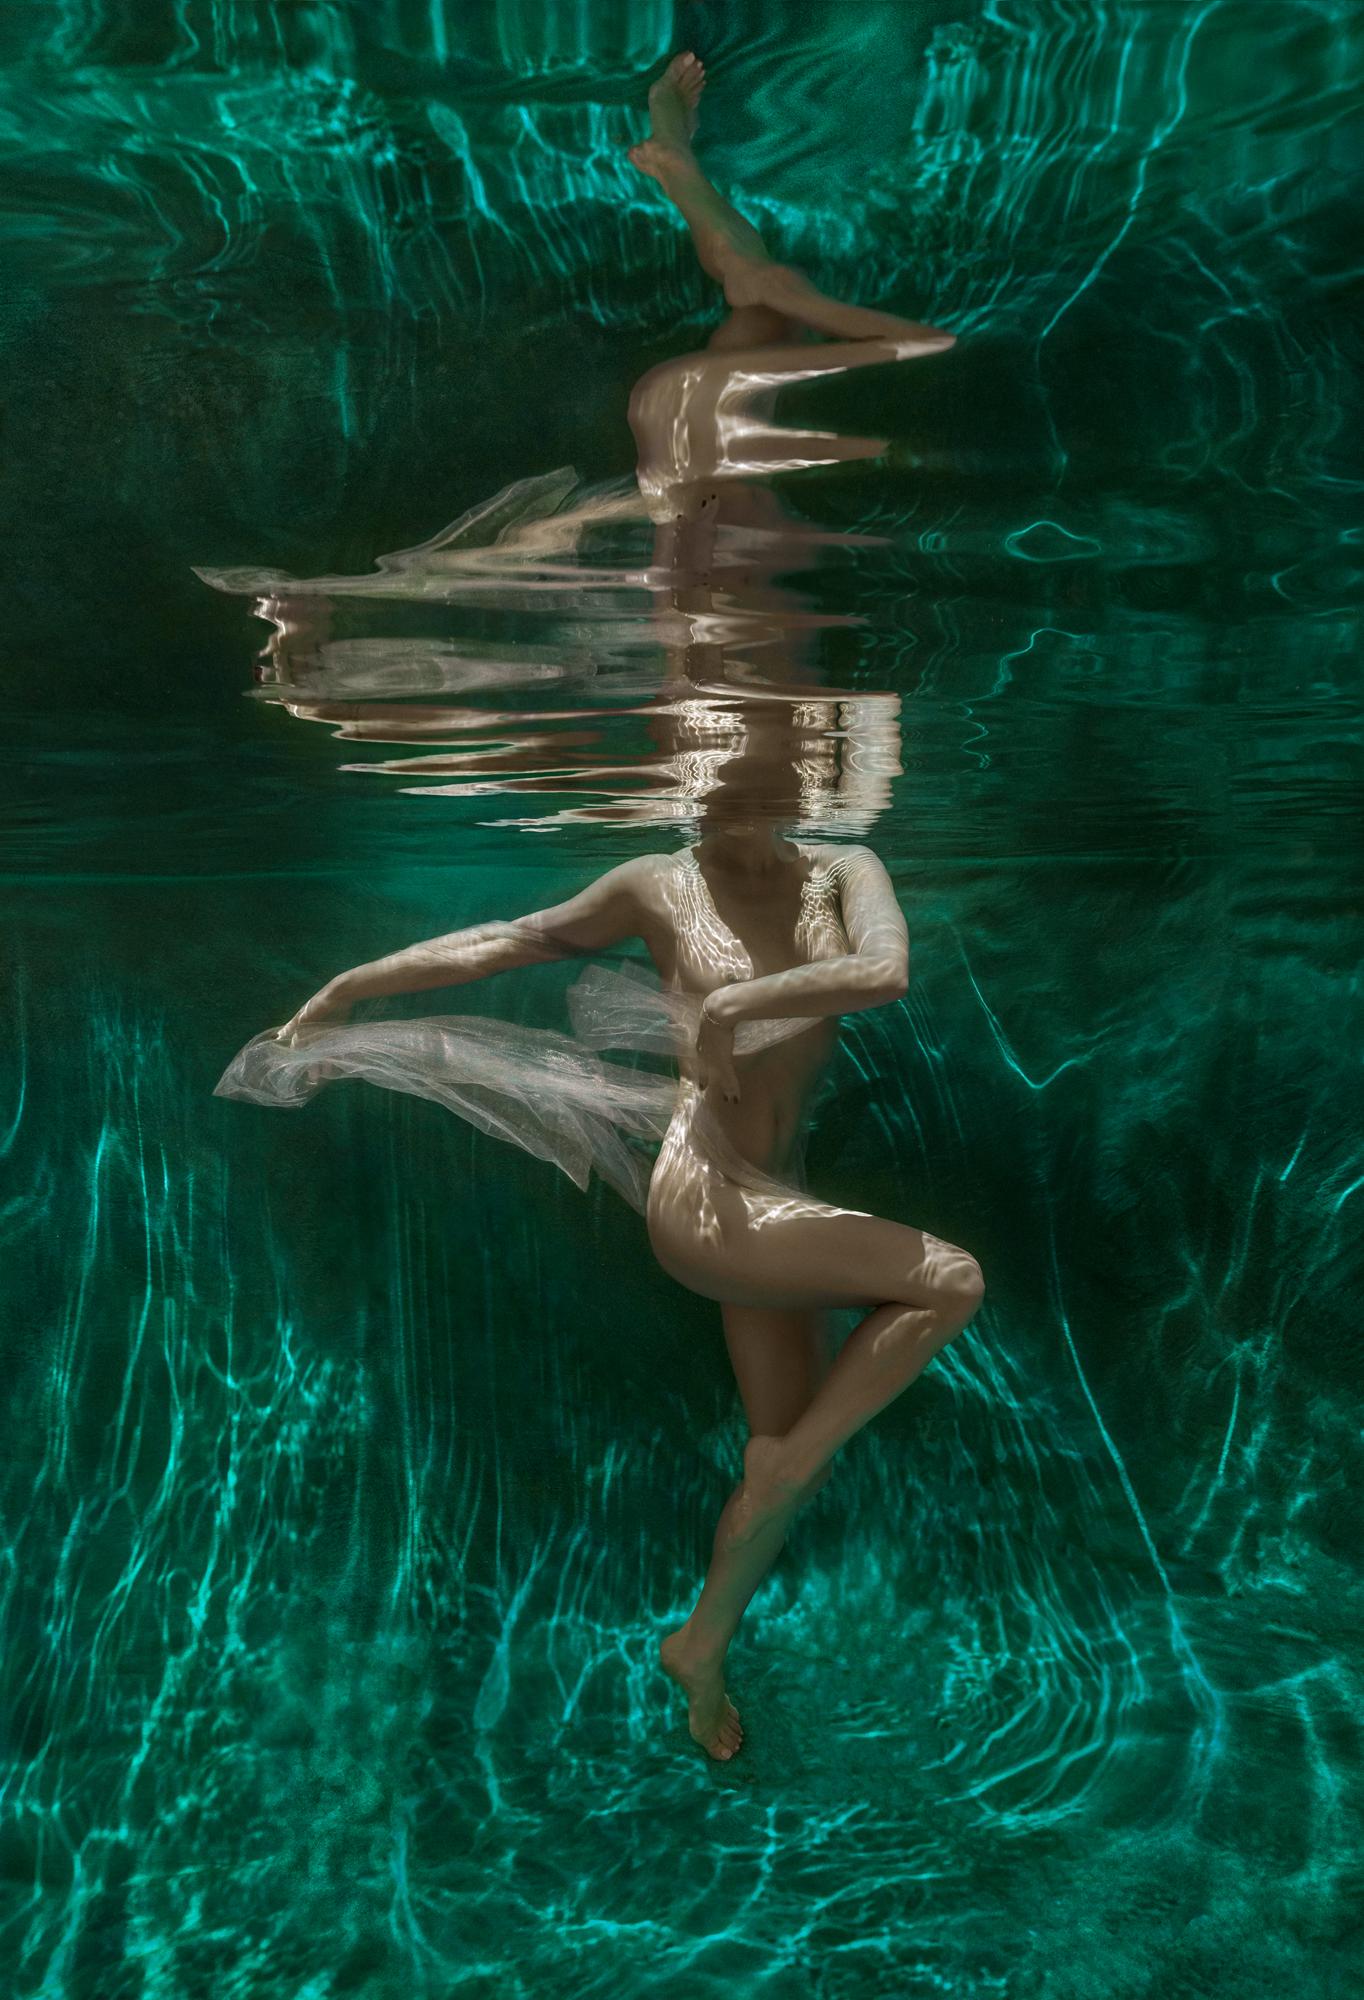 Alex Sher Nude Photograph - Мalachite Cave - underwater photograph - archival pigment print 35x24"